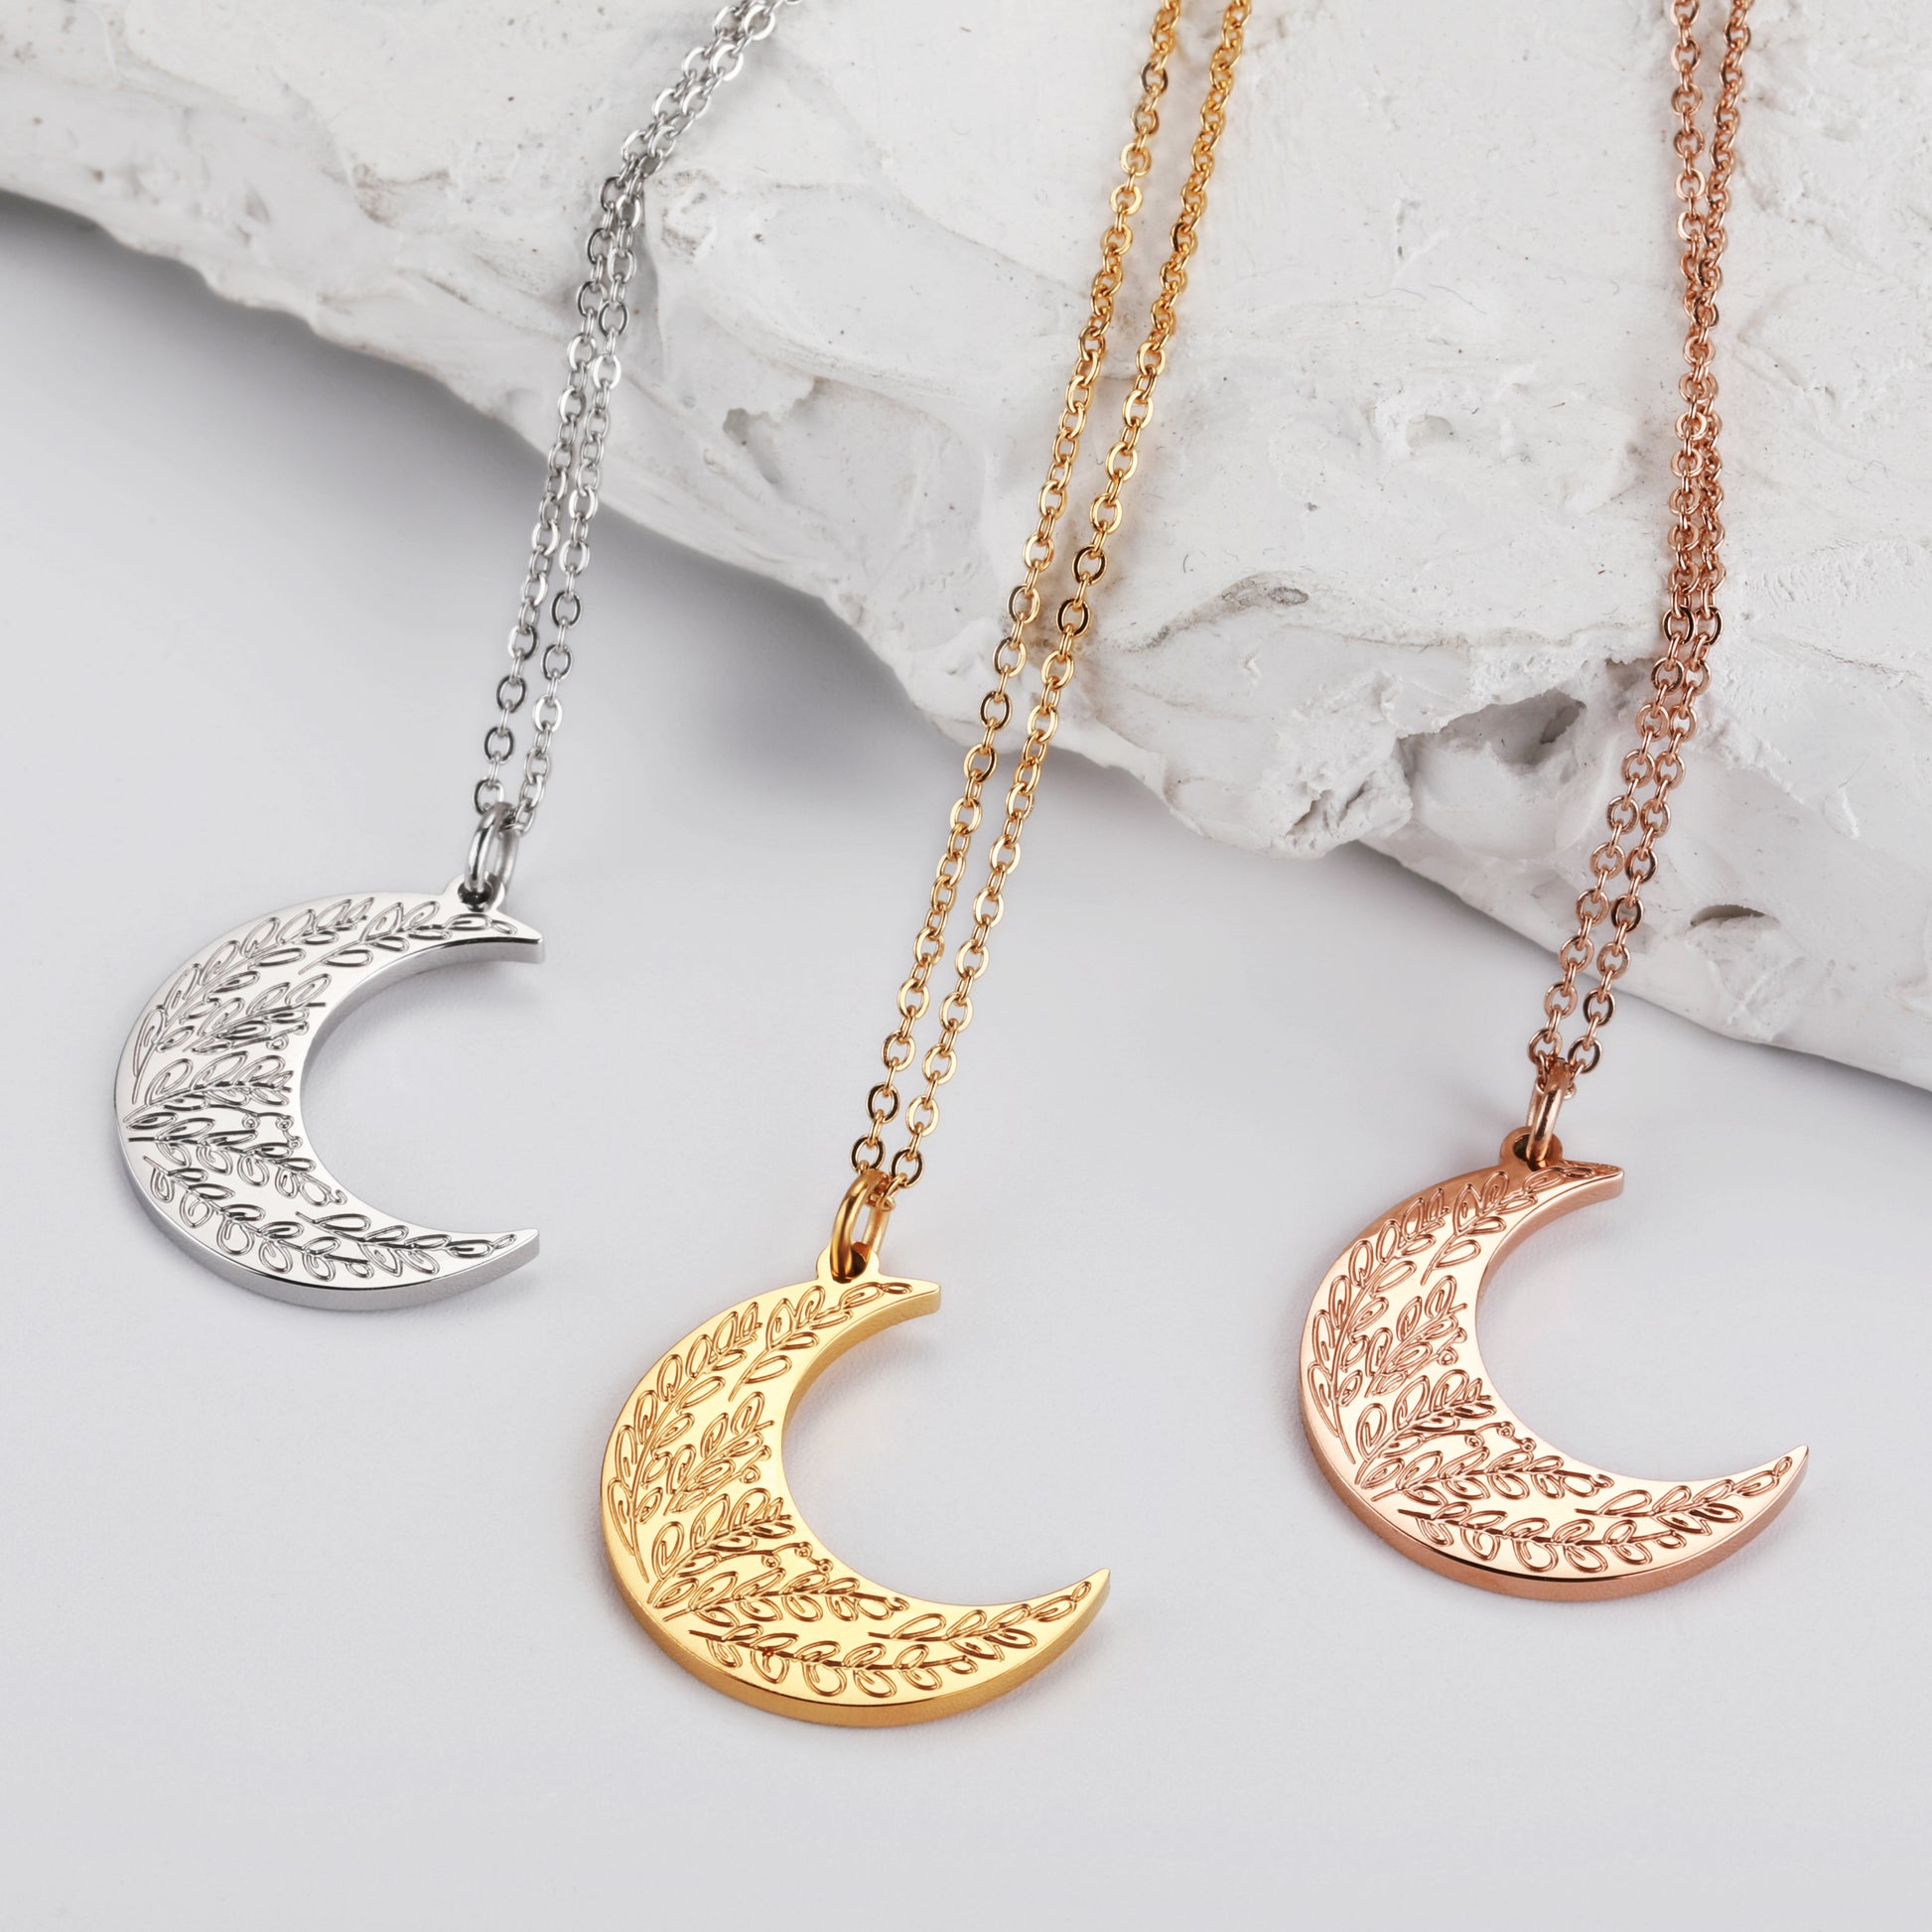 Darjali Jewelry Botanical Moon Necklace Group